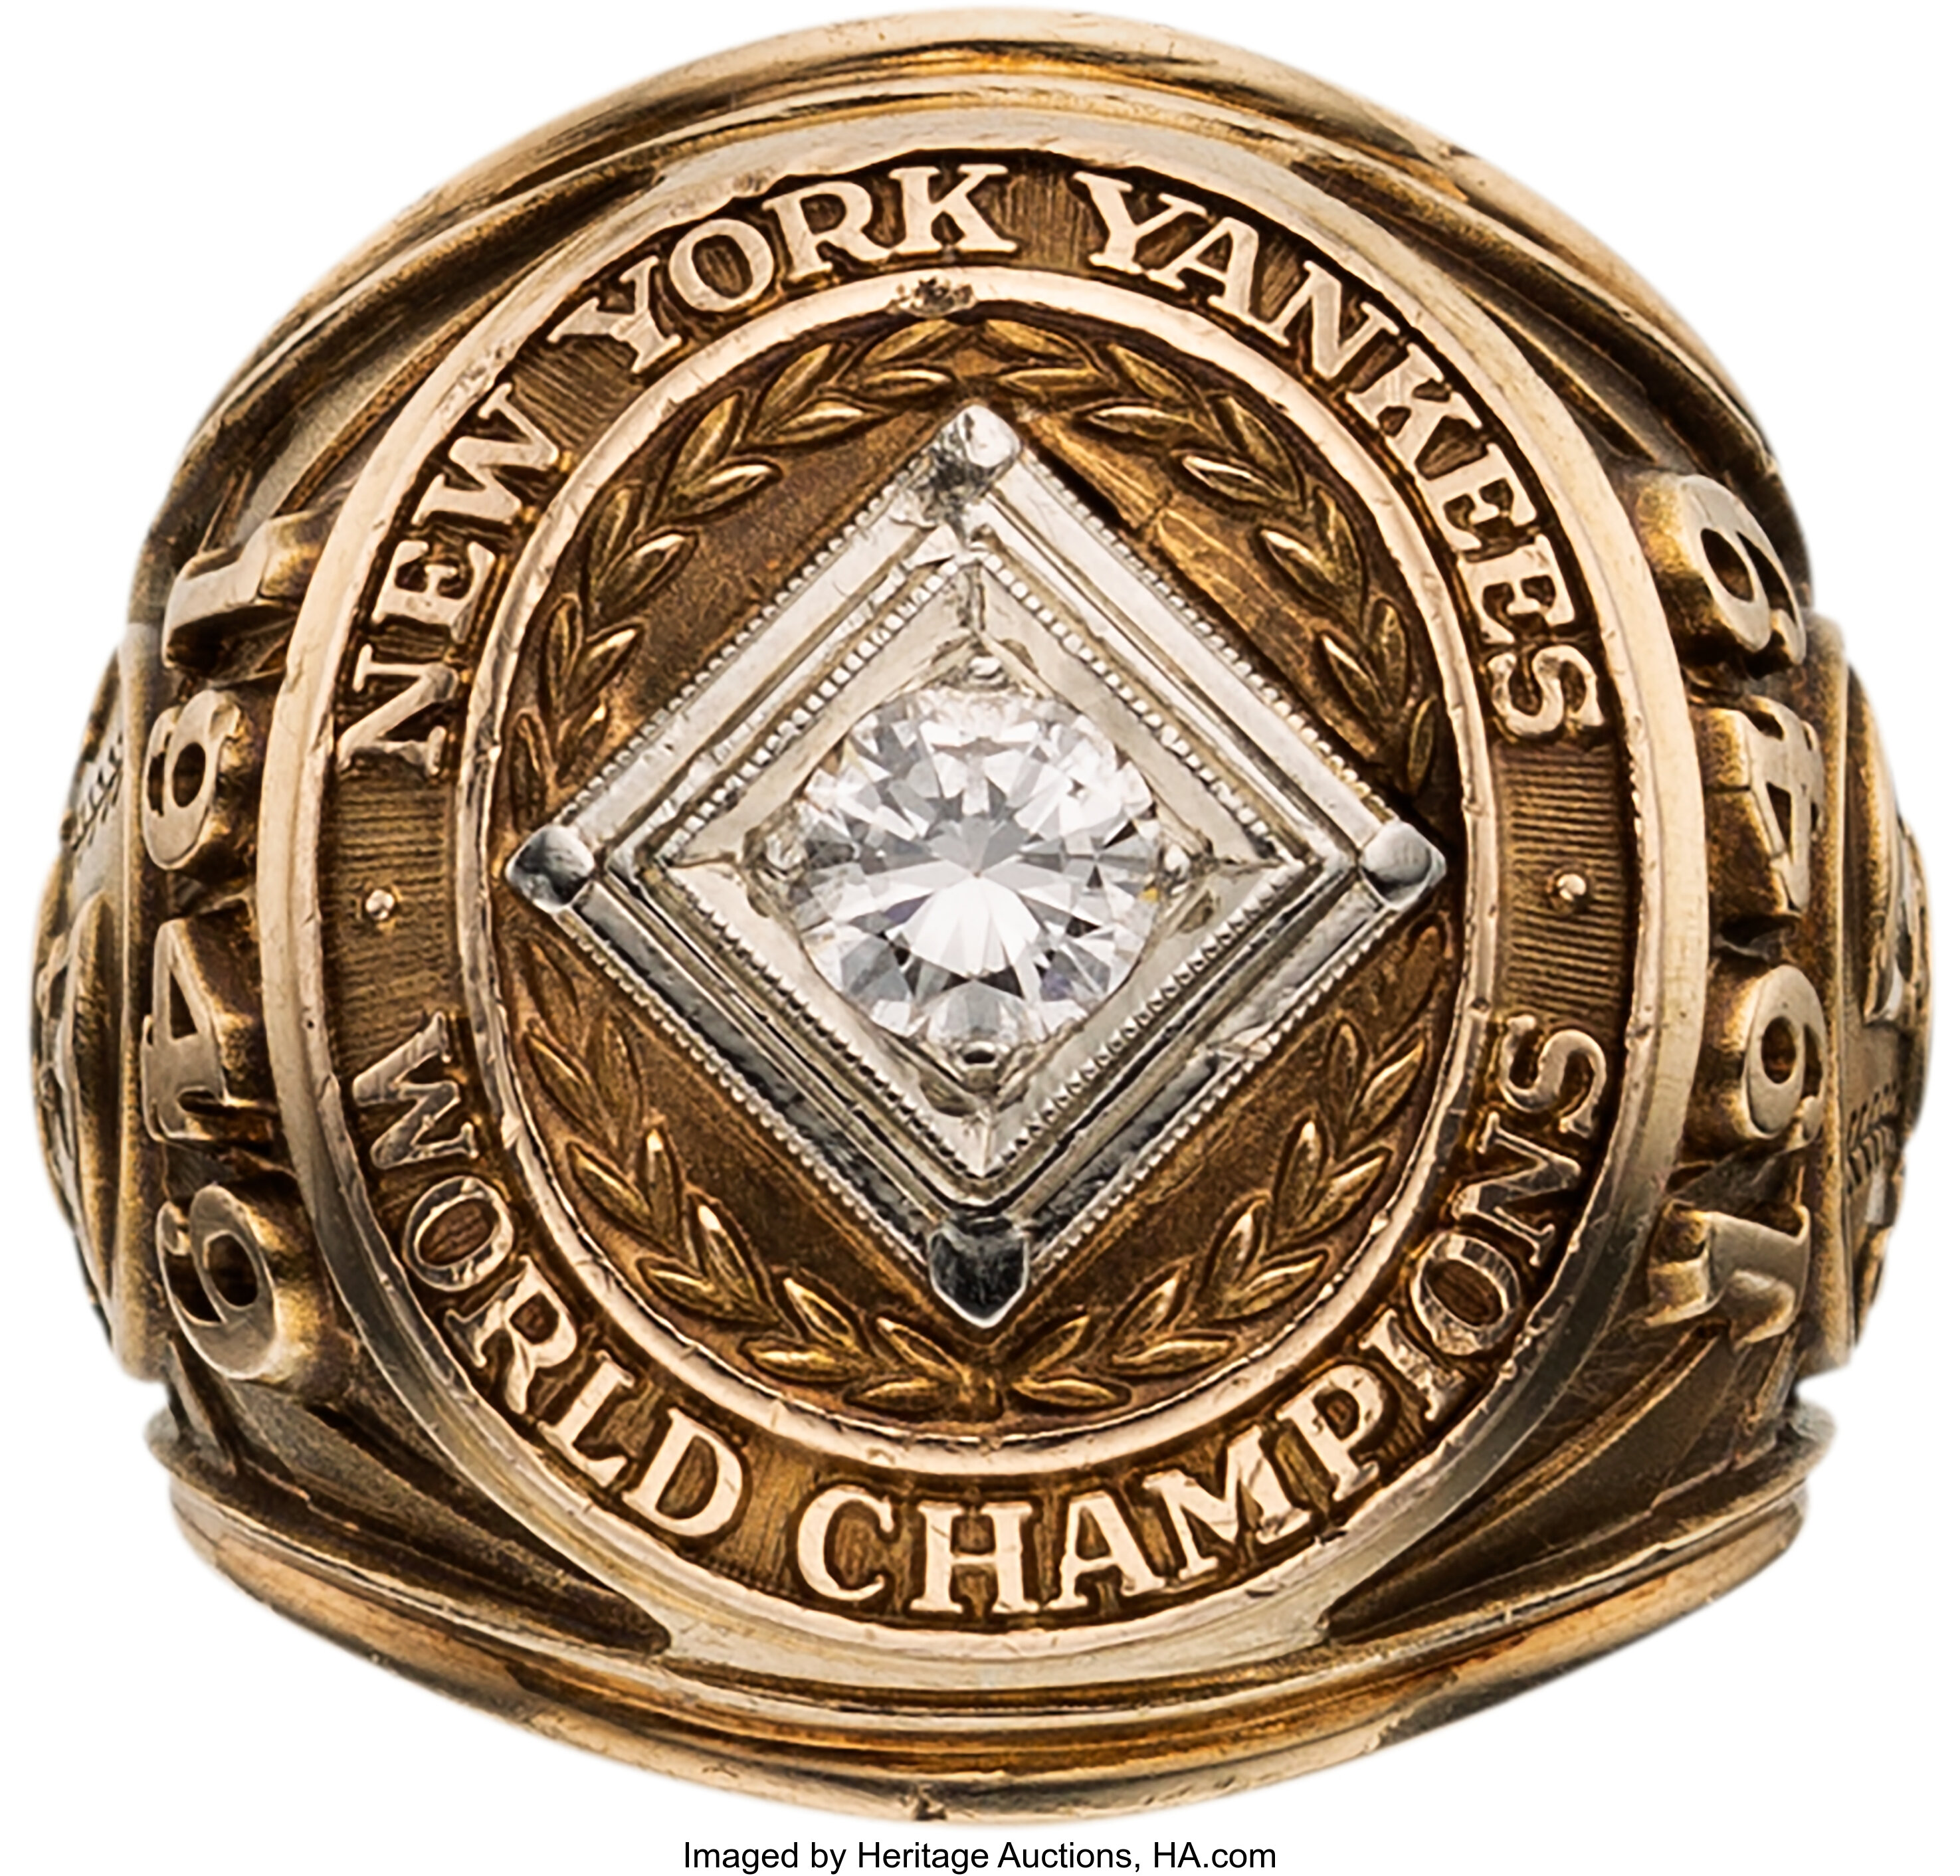 New York Yankees SGA 7/31/22 2022 World Series Championship Collectible Ring